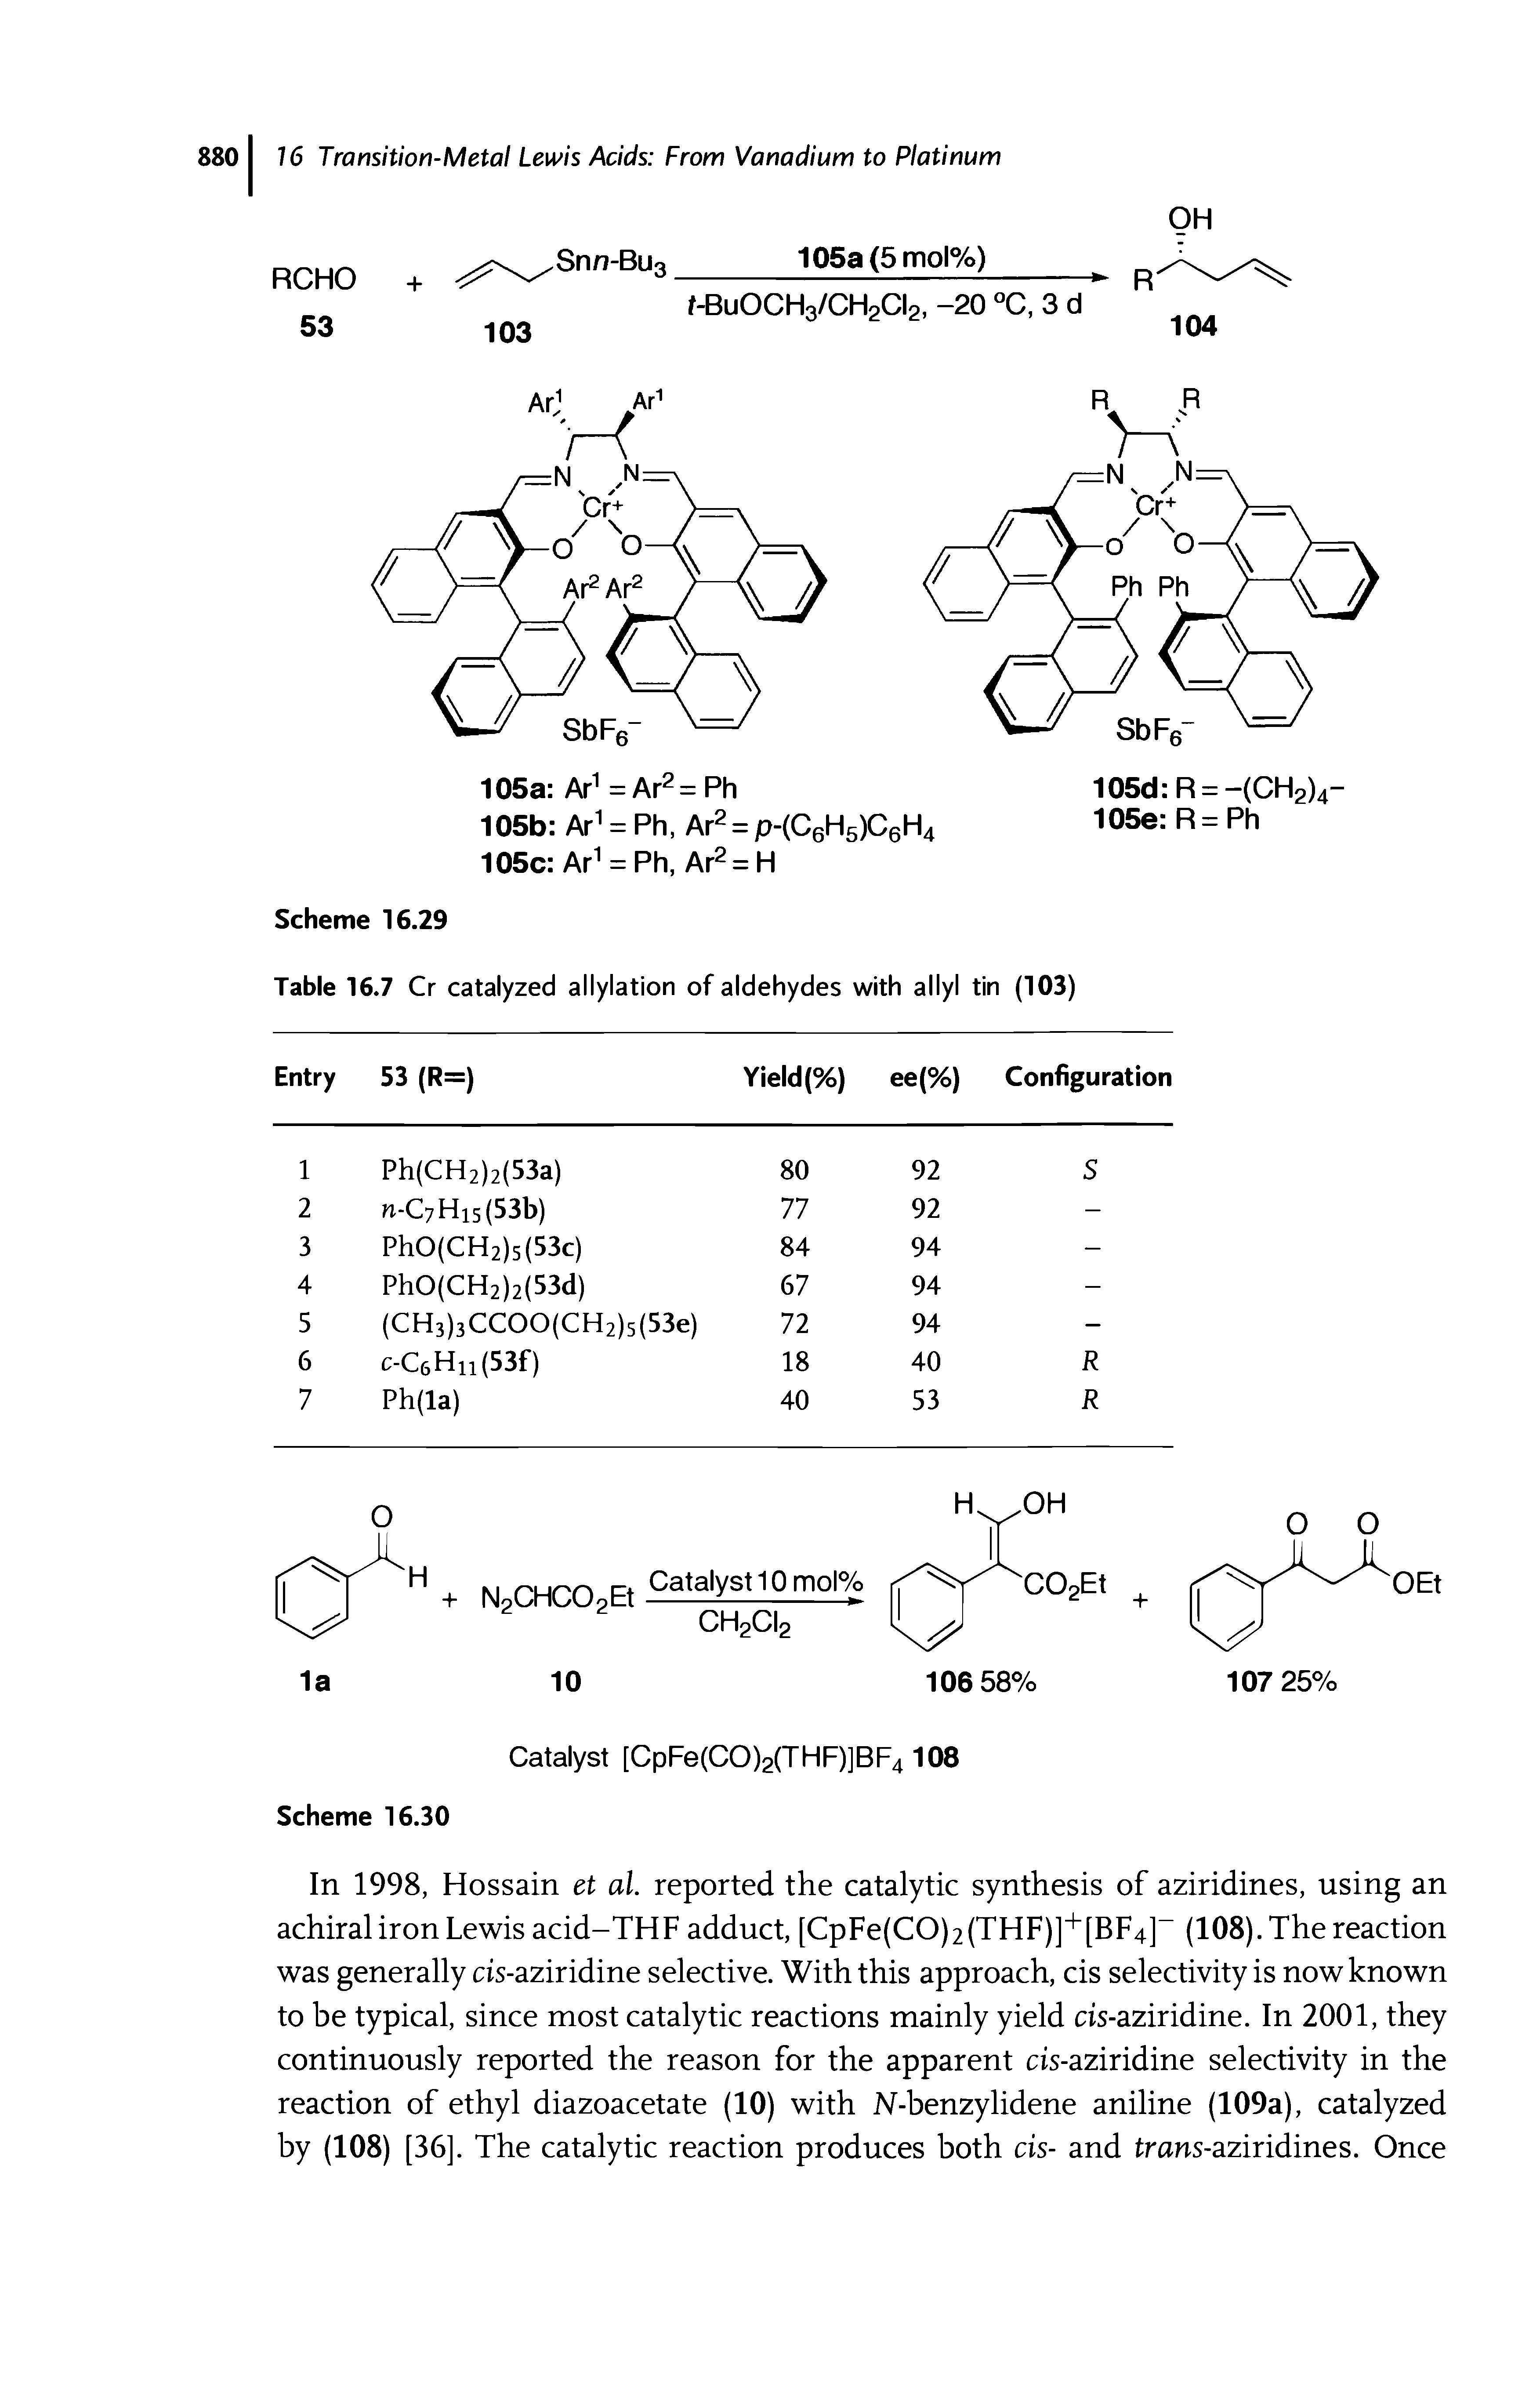 Table 16.7 Cr catalyzed allylation of aldehydes with allyl tin (103)...